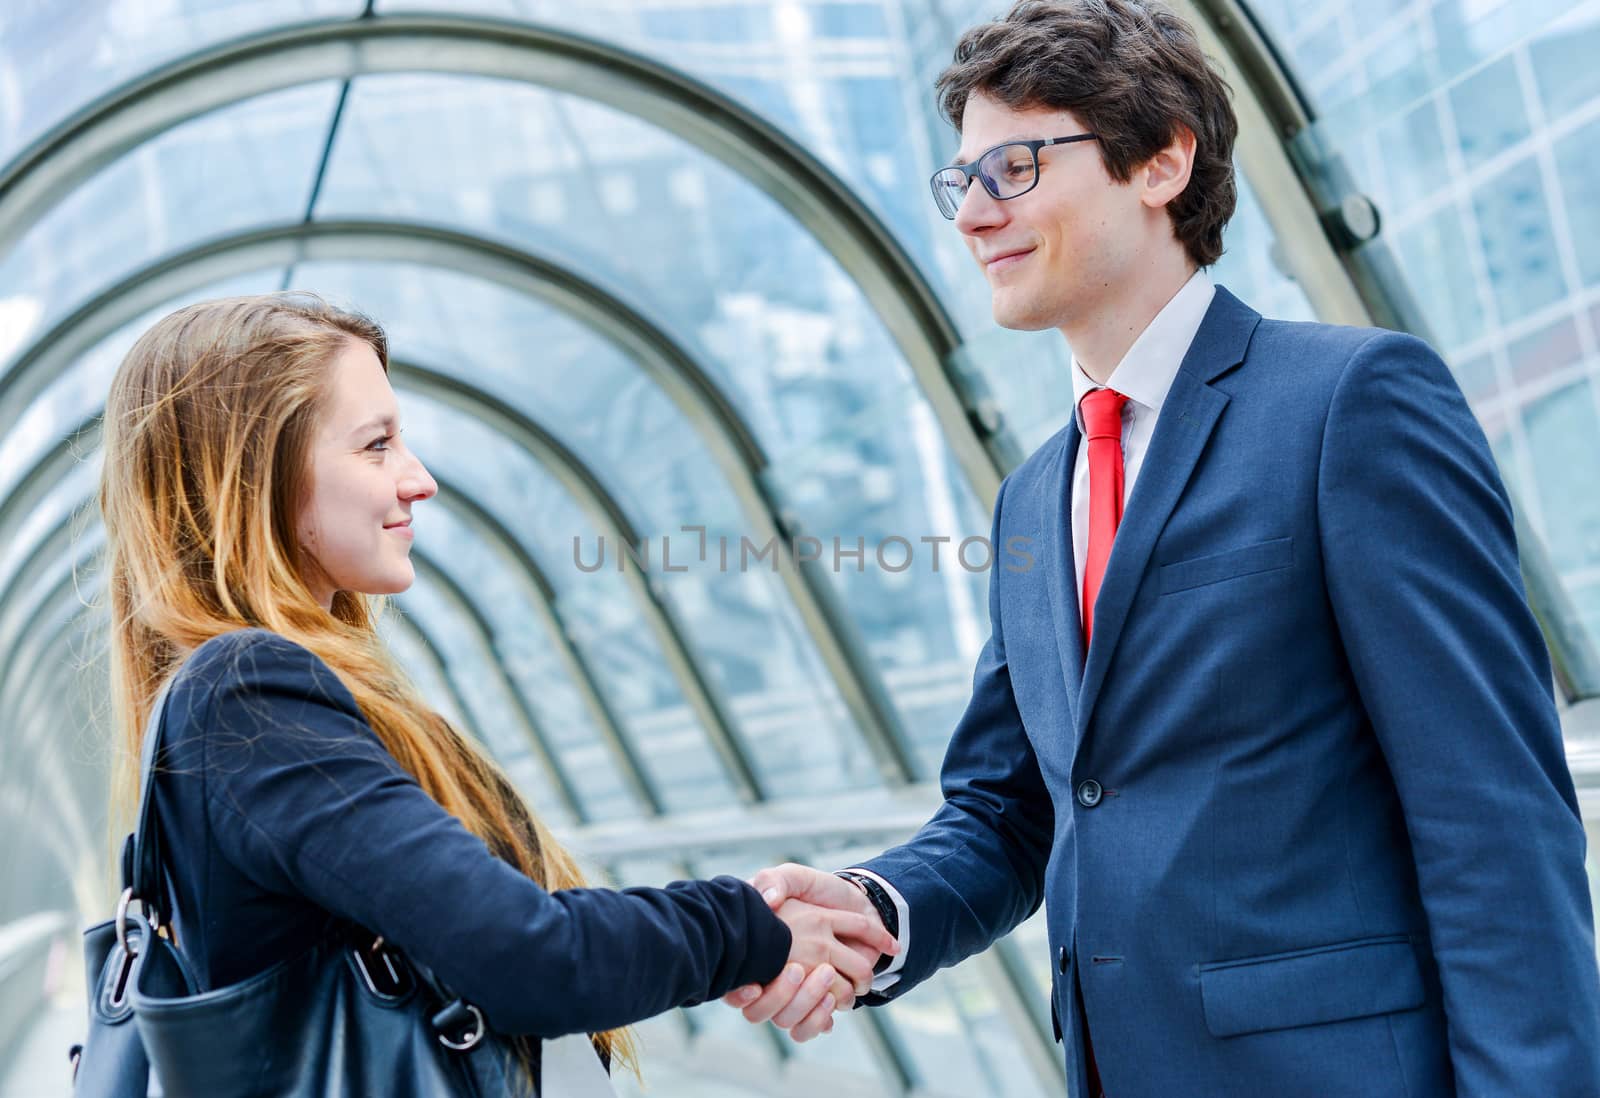 Junior executives dynamics shaking hands by pixinoo